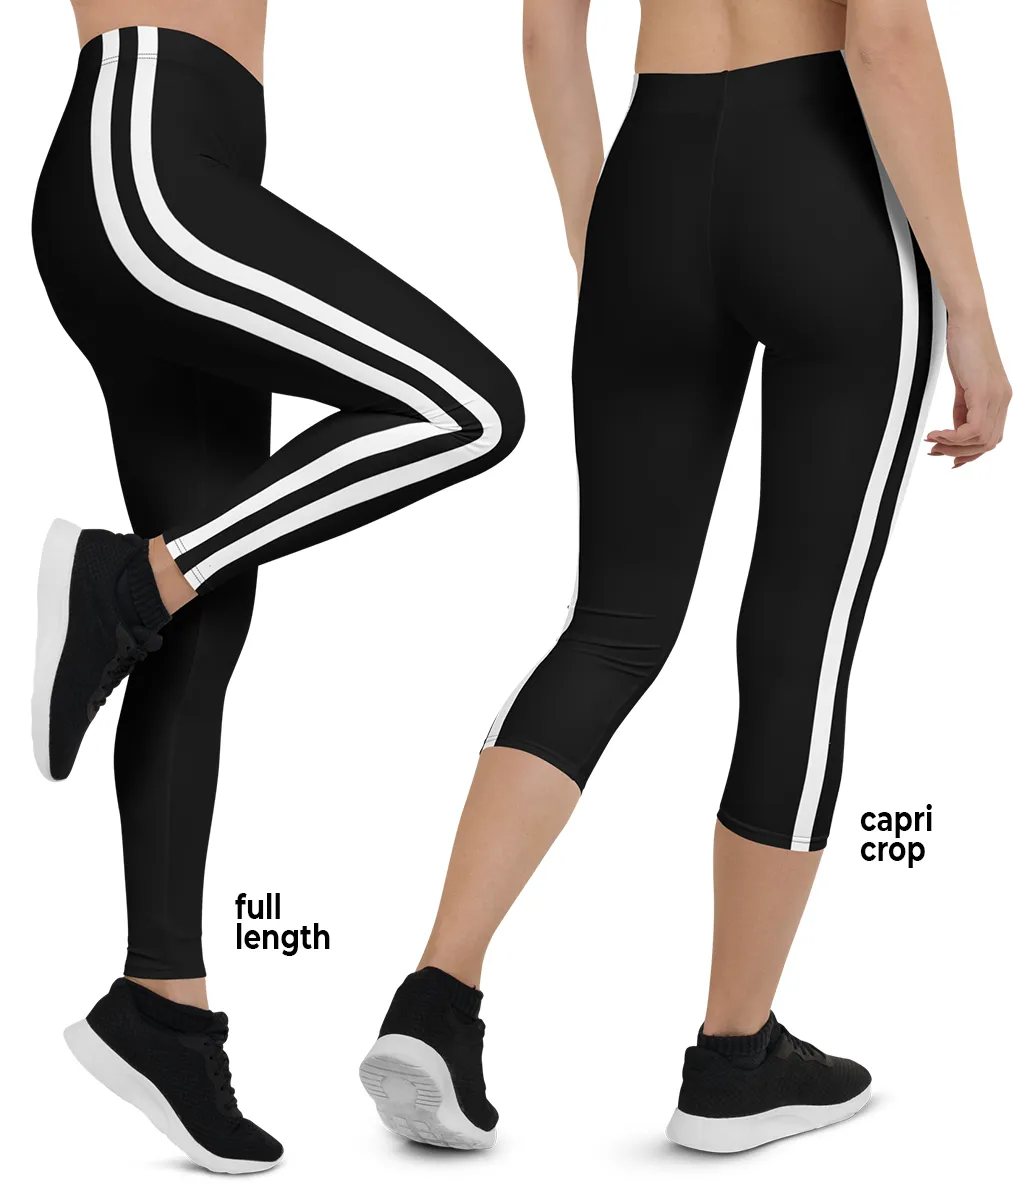 https://squeakychimp.com/wp-content/uploads/black-double-side-stripe-leggings.webp